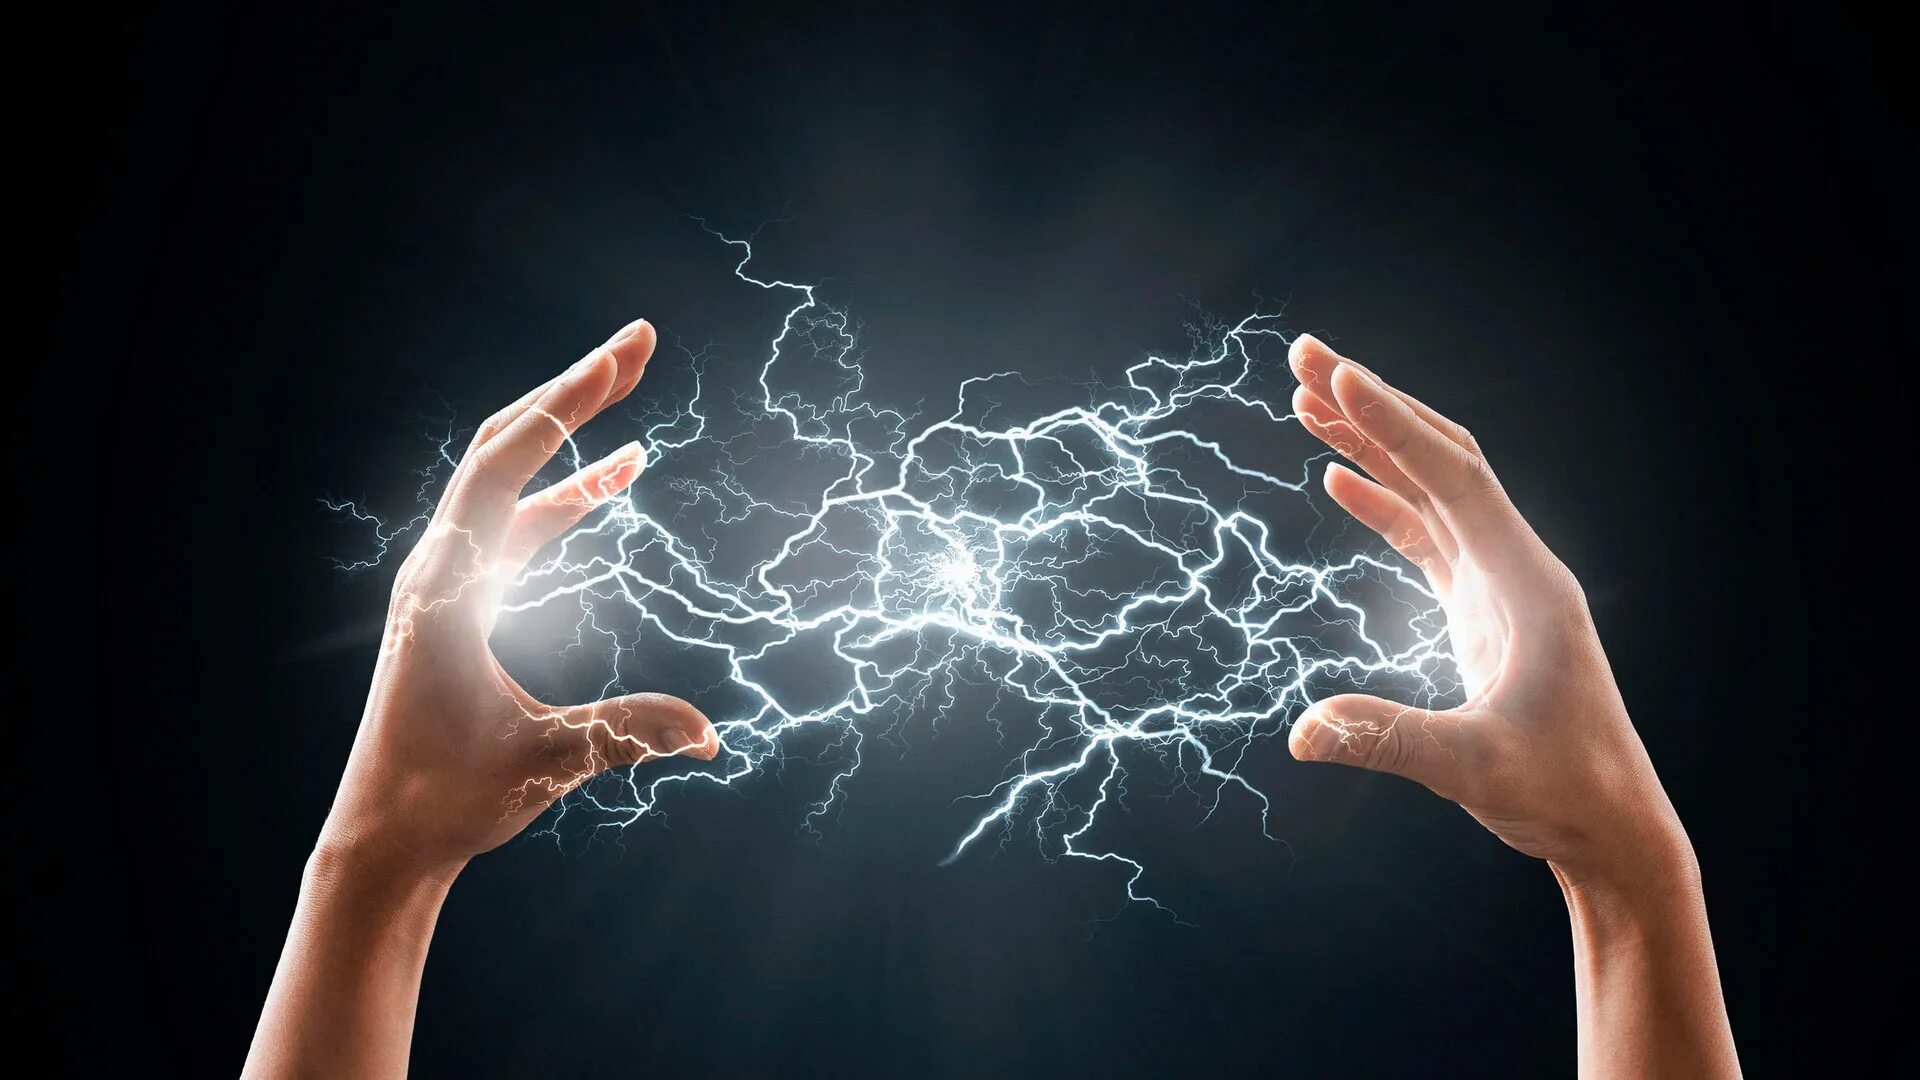 Молния на руке. Электричество. Электричество в руках. Электричество картинки. Жизни пауэр